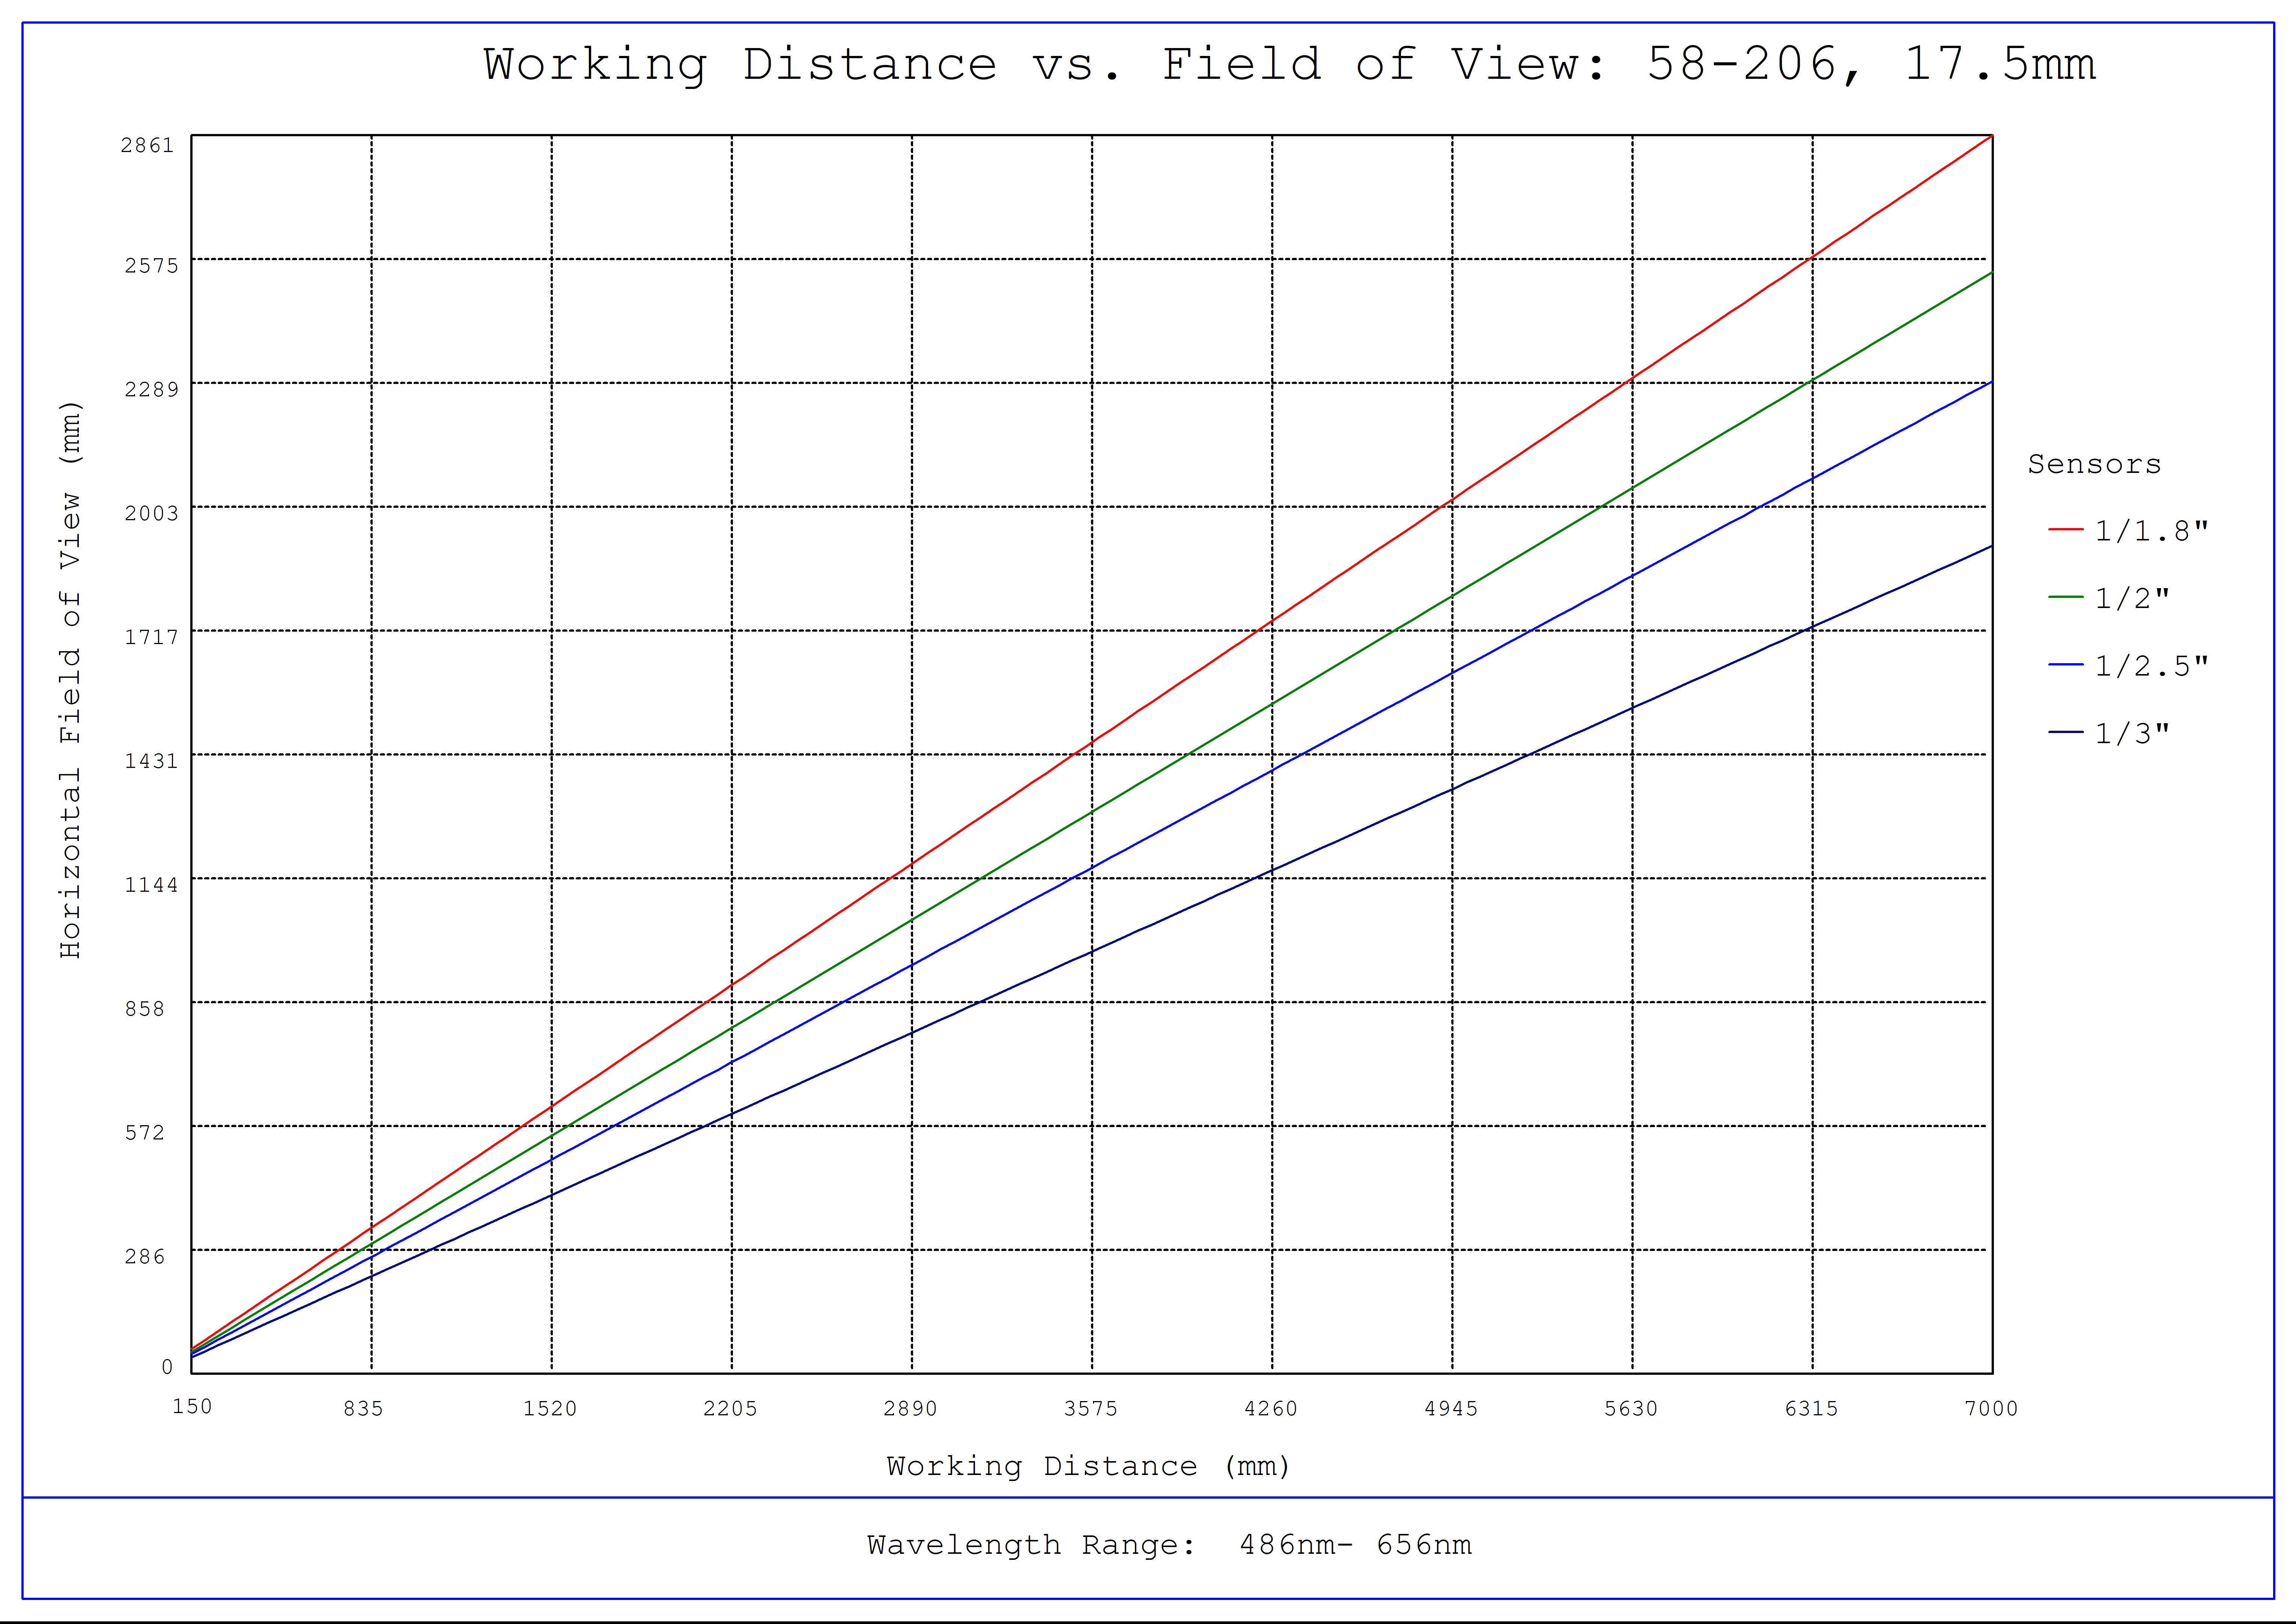 #58-206, 17.5mm FL f/2.5, Blue Series M12 Lens, Working Distance versus Field of View Plot